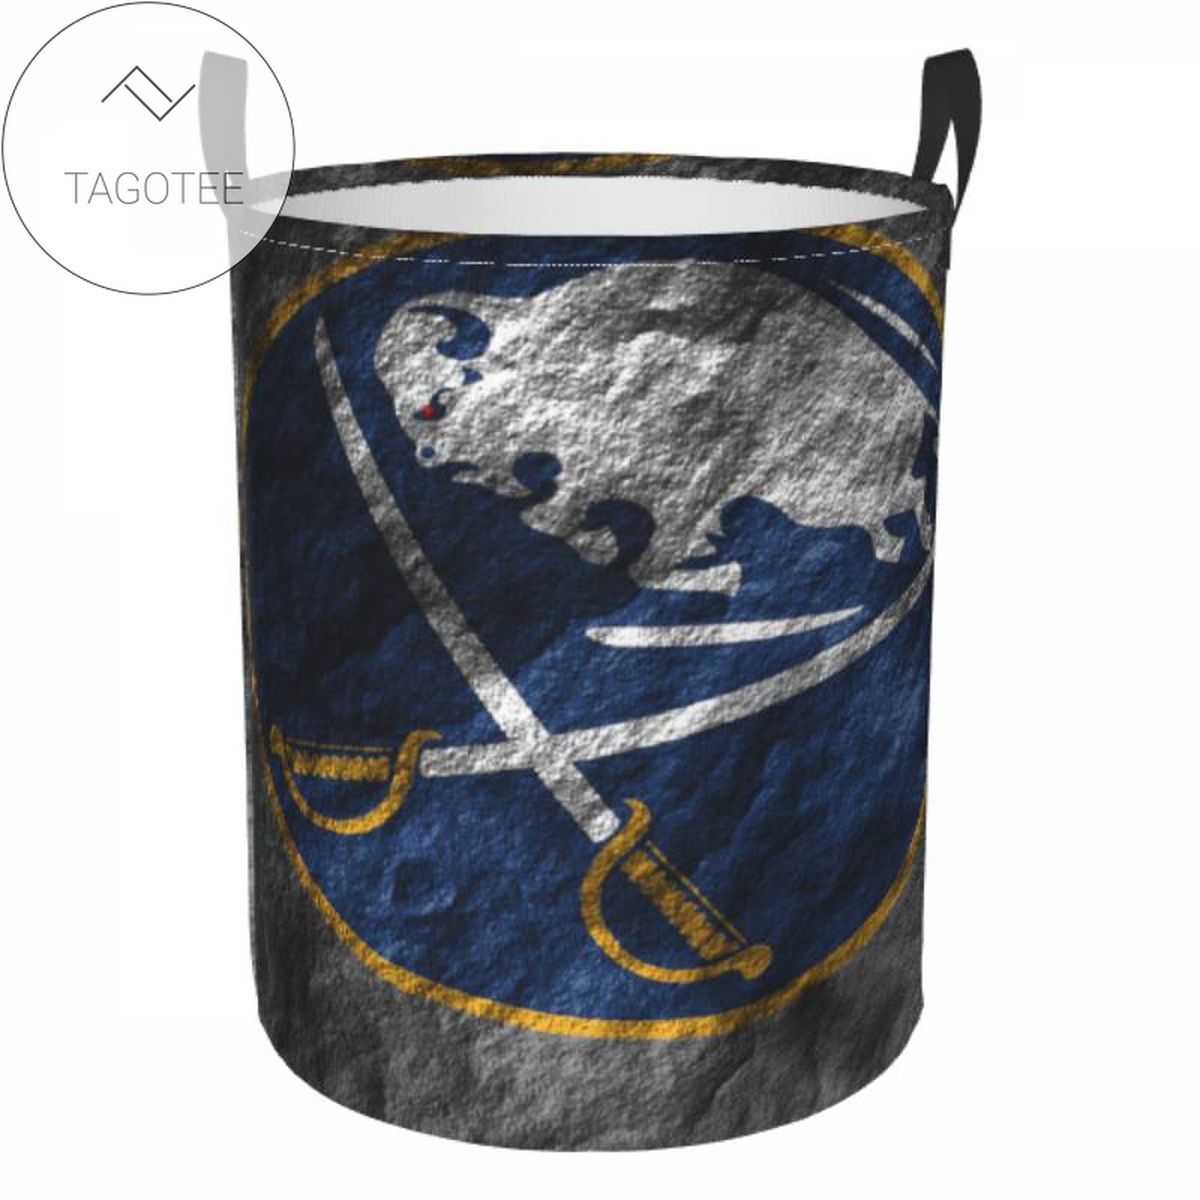 Buffalo Sabres Clothes Basket Target Laundry Bag Type #092011